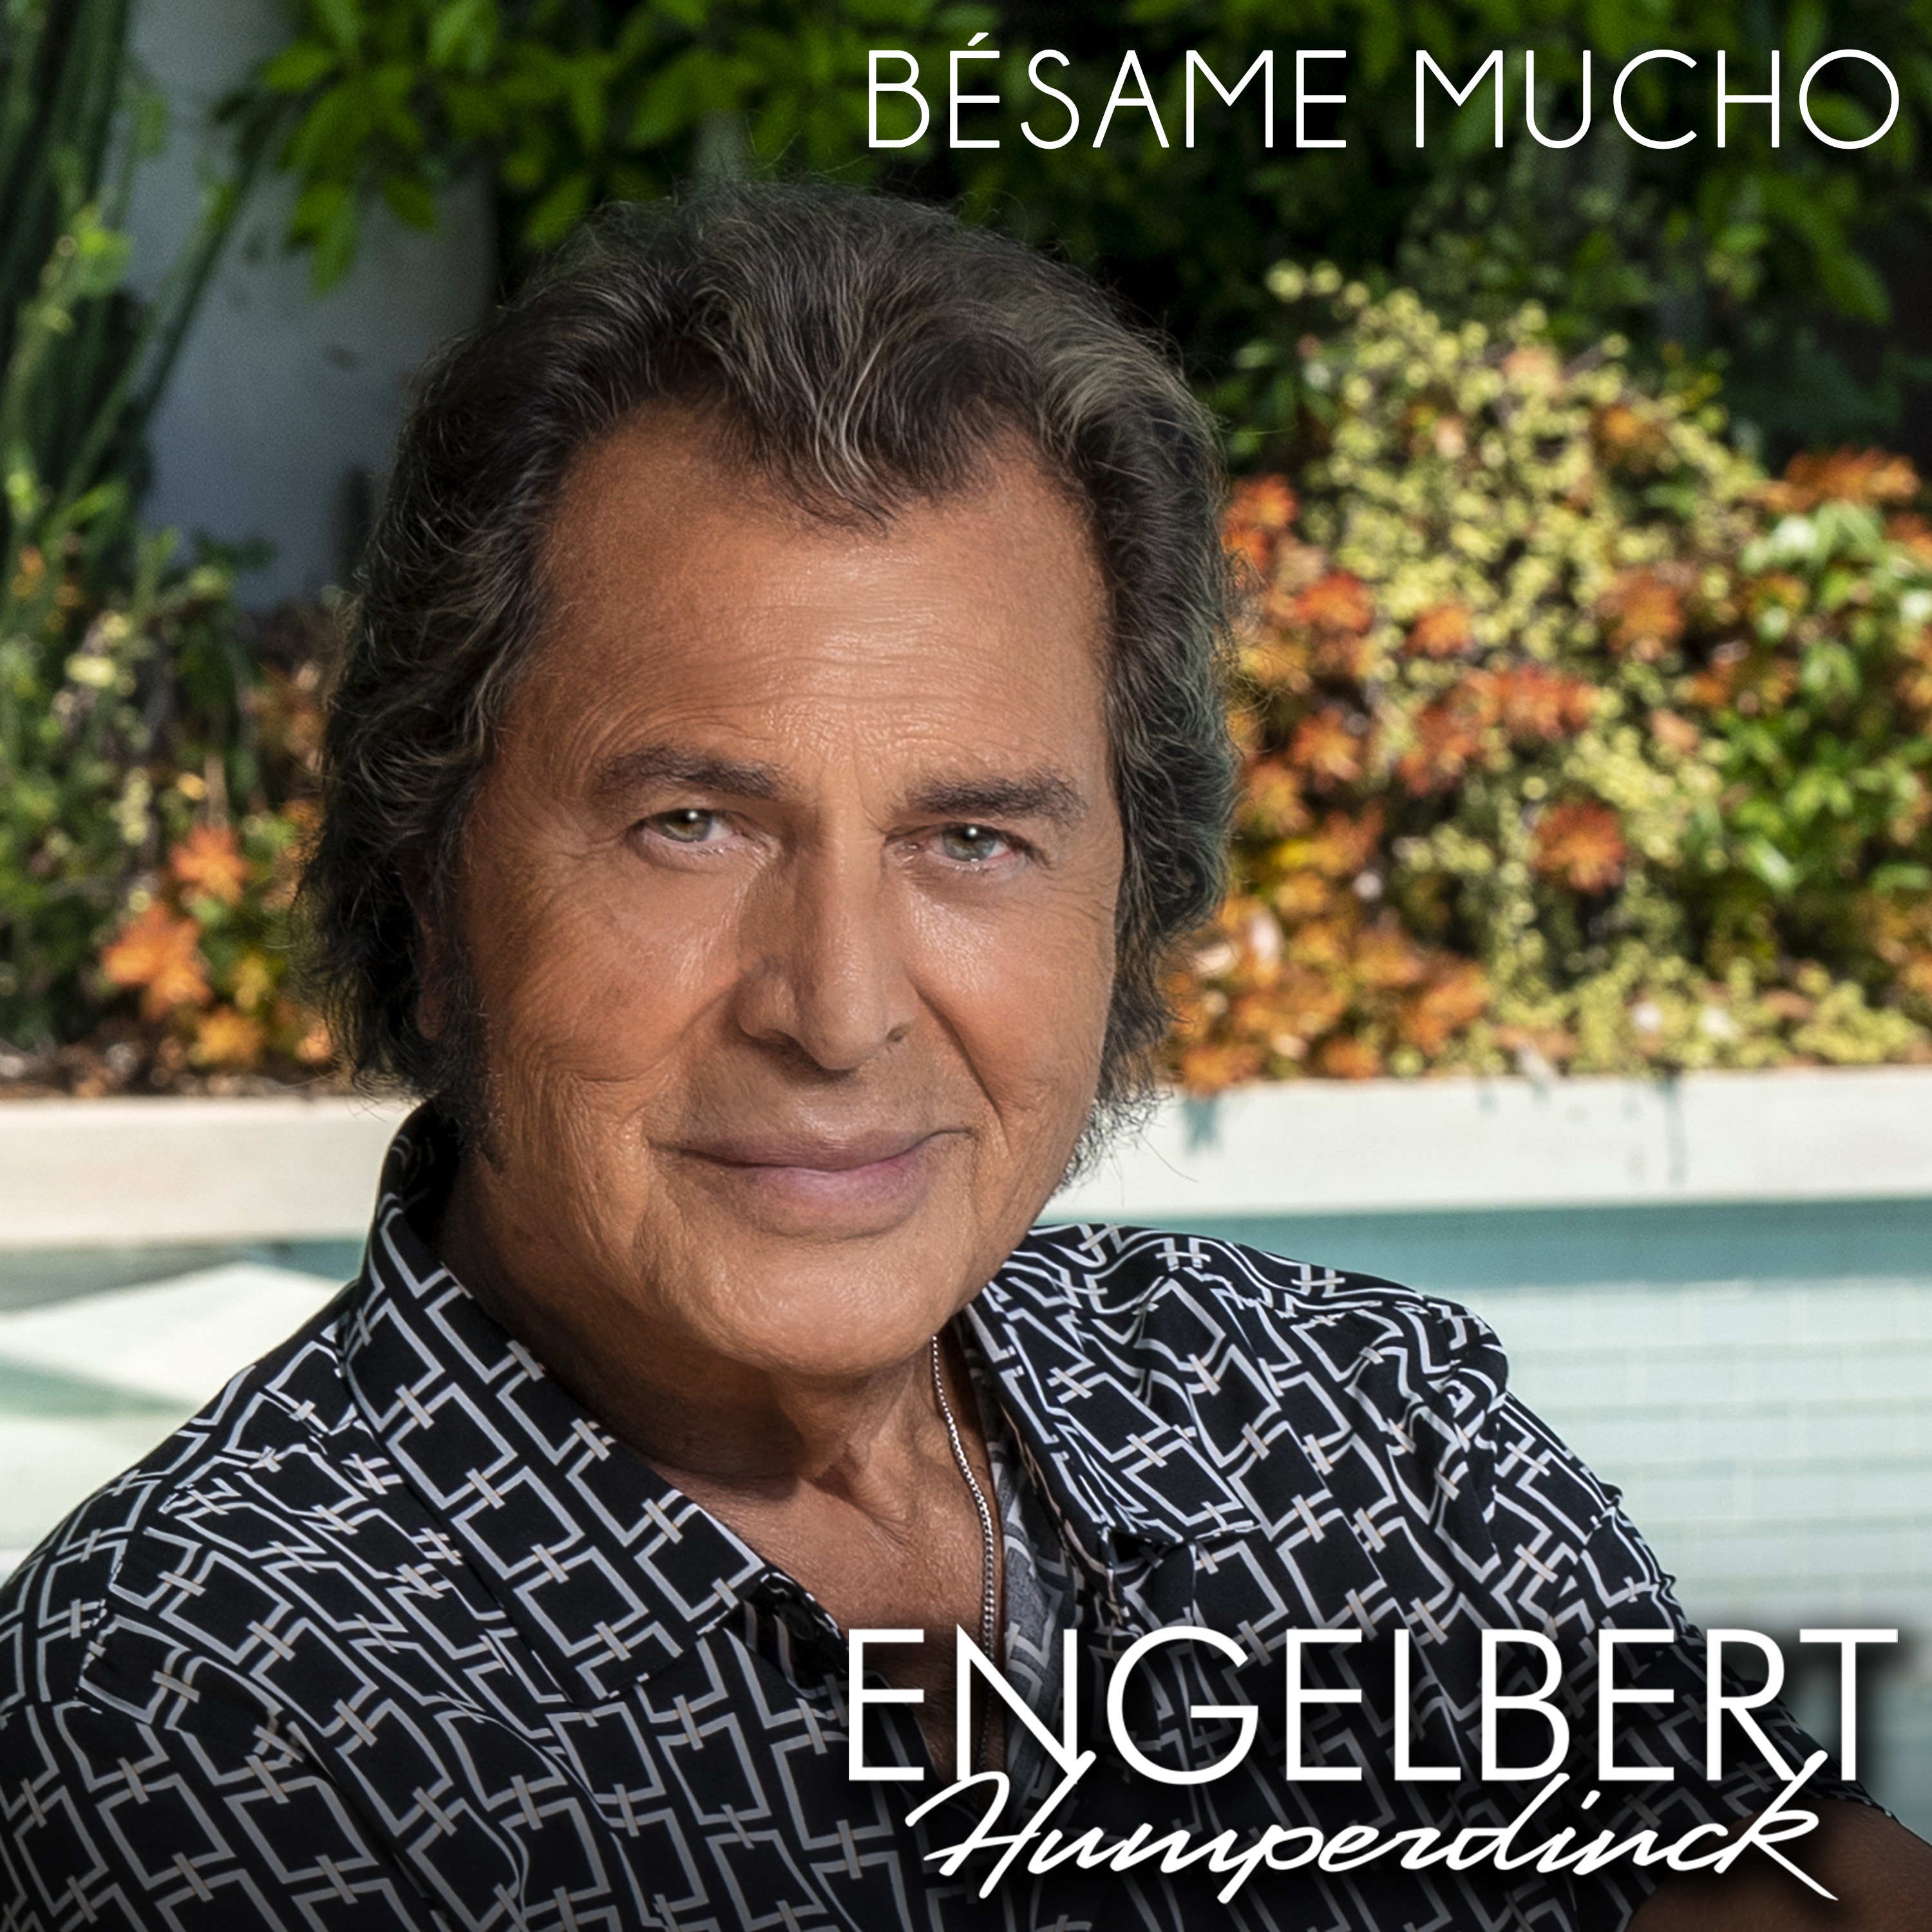 Engelbert Humperdinck Celebrates Valentine's Day with a Romantic New Rendition of "Bésame Mucho"